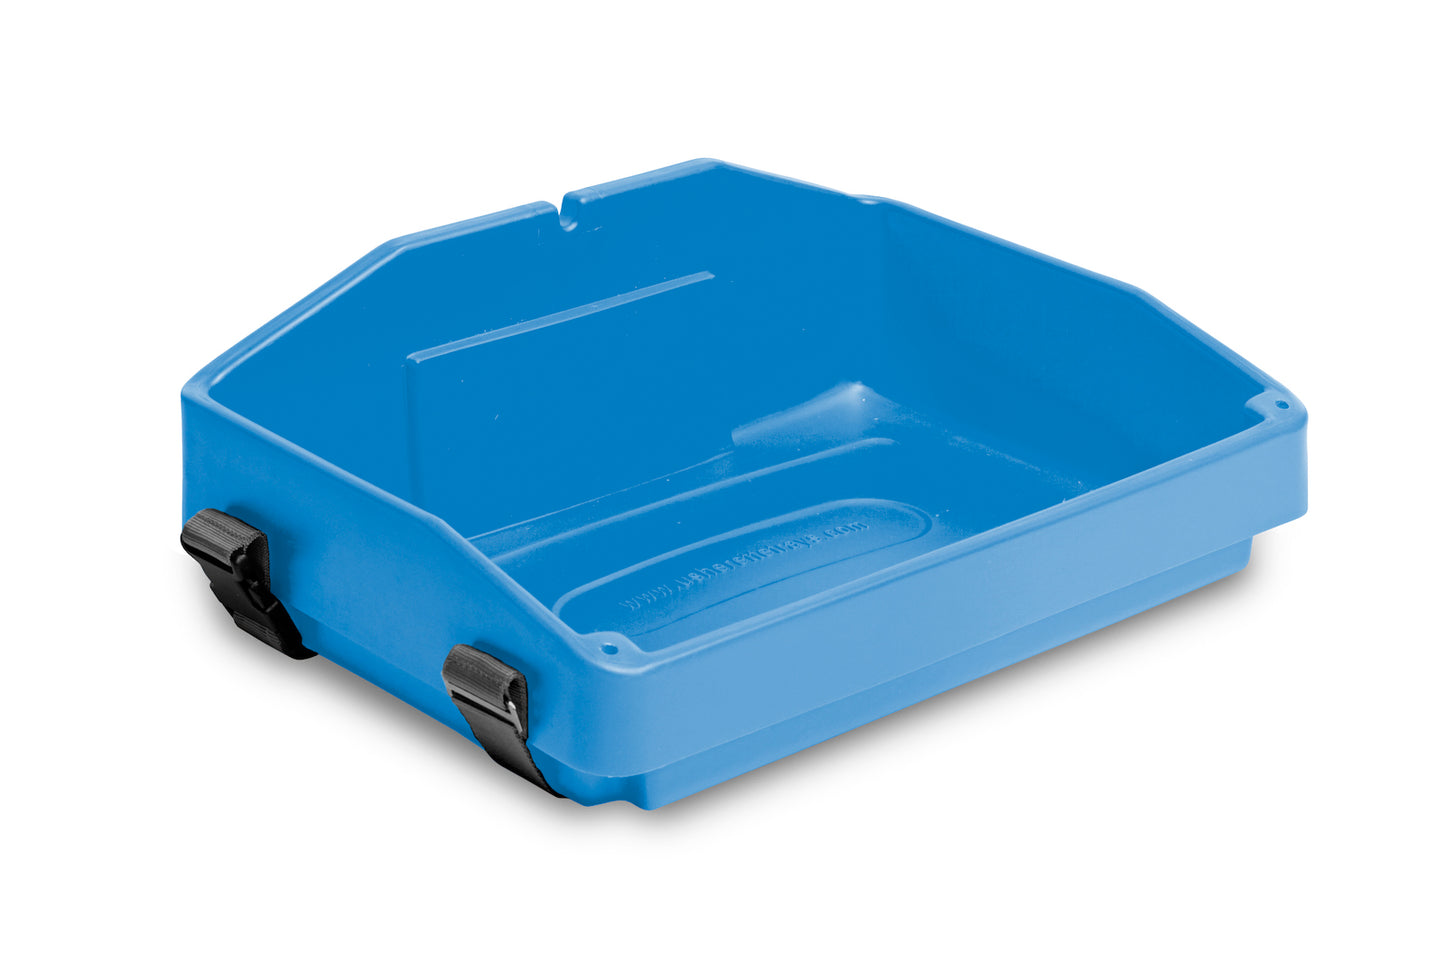 Light blue plastic usherette tray